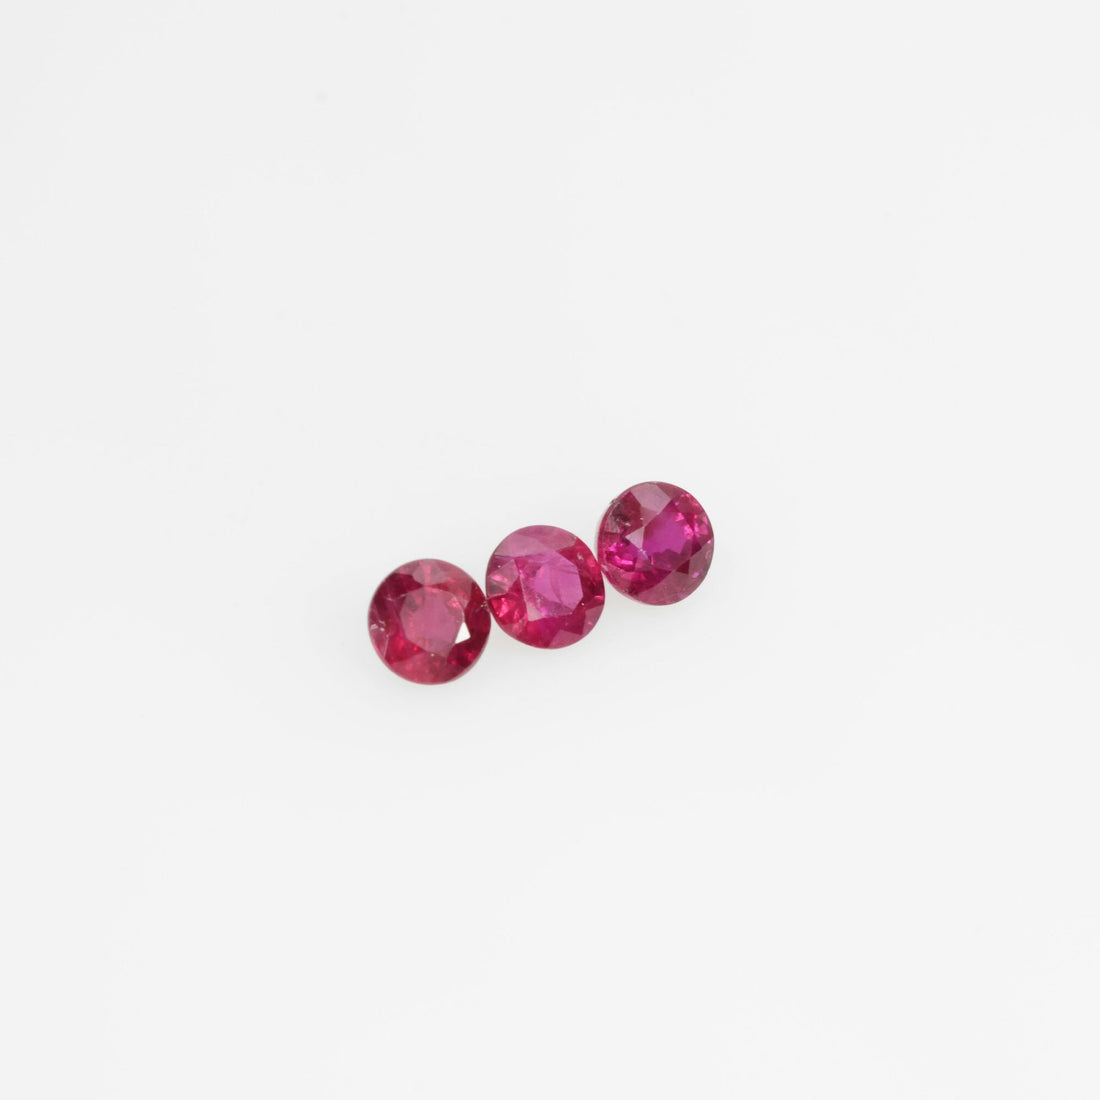 2.6-3.6 mm Natural Ruby Loose Gemstone Round Cut